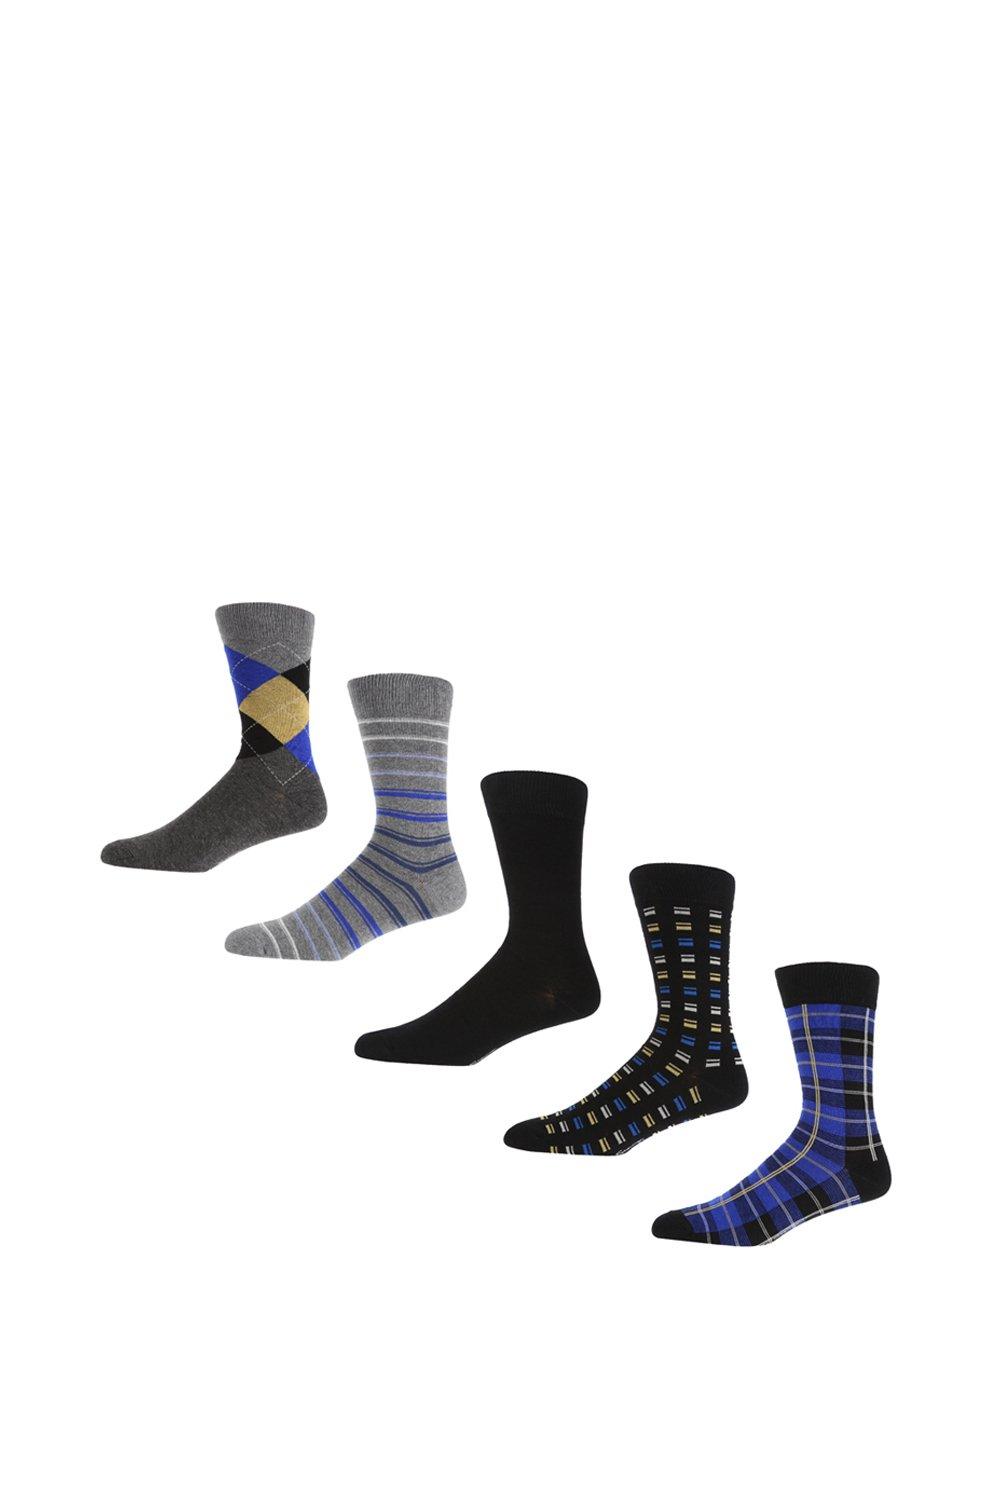 Underwear & Socks | Ben Sherman Chant 5 Pack Gift Socks | Ben Sherman